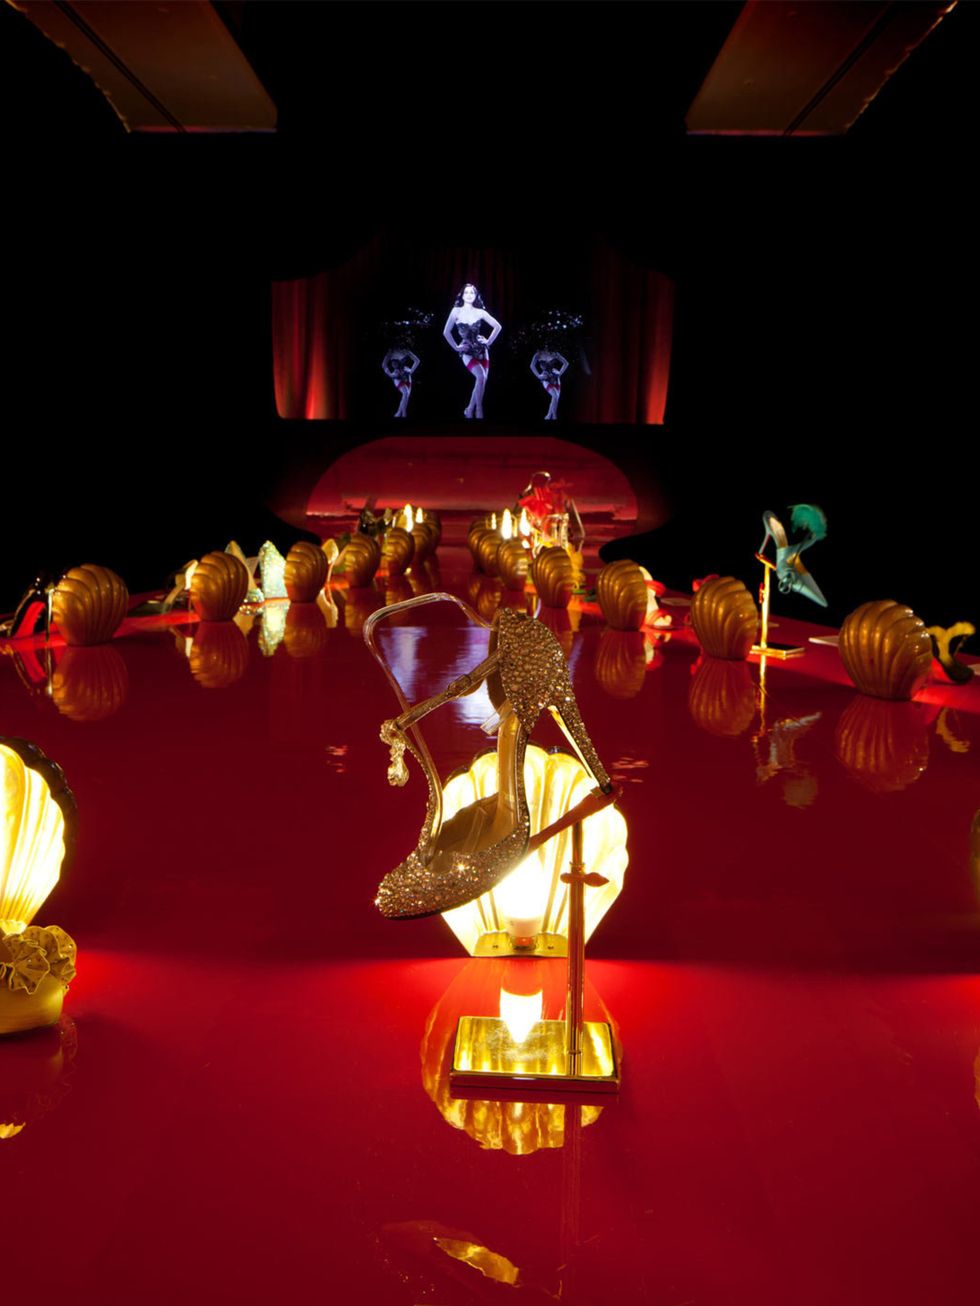 <p>The Dita Von Teese Hologram in Christian Louboutin's exhibition</p>